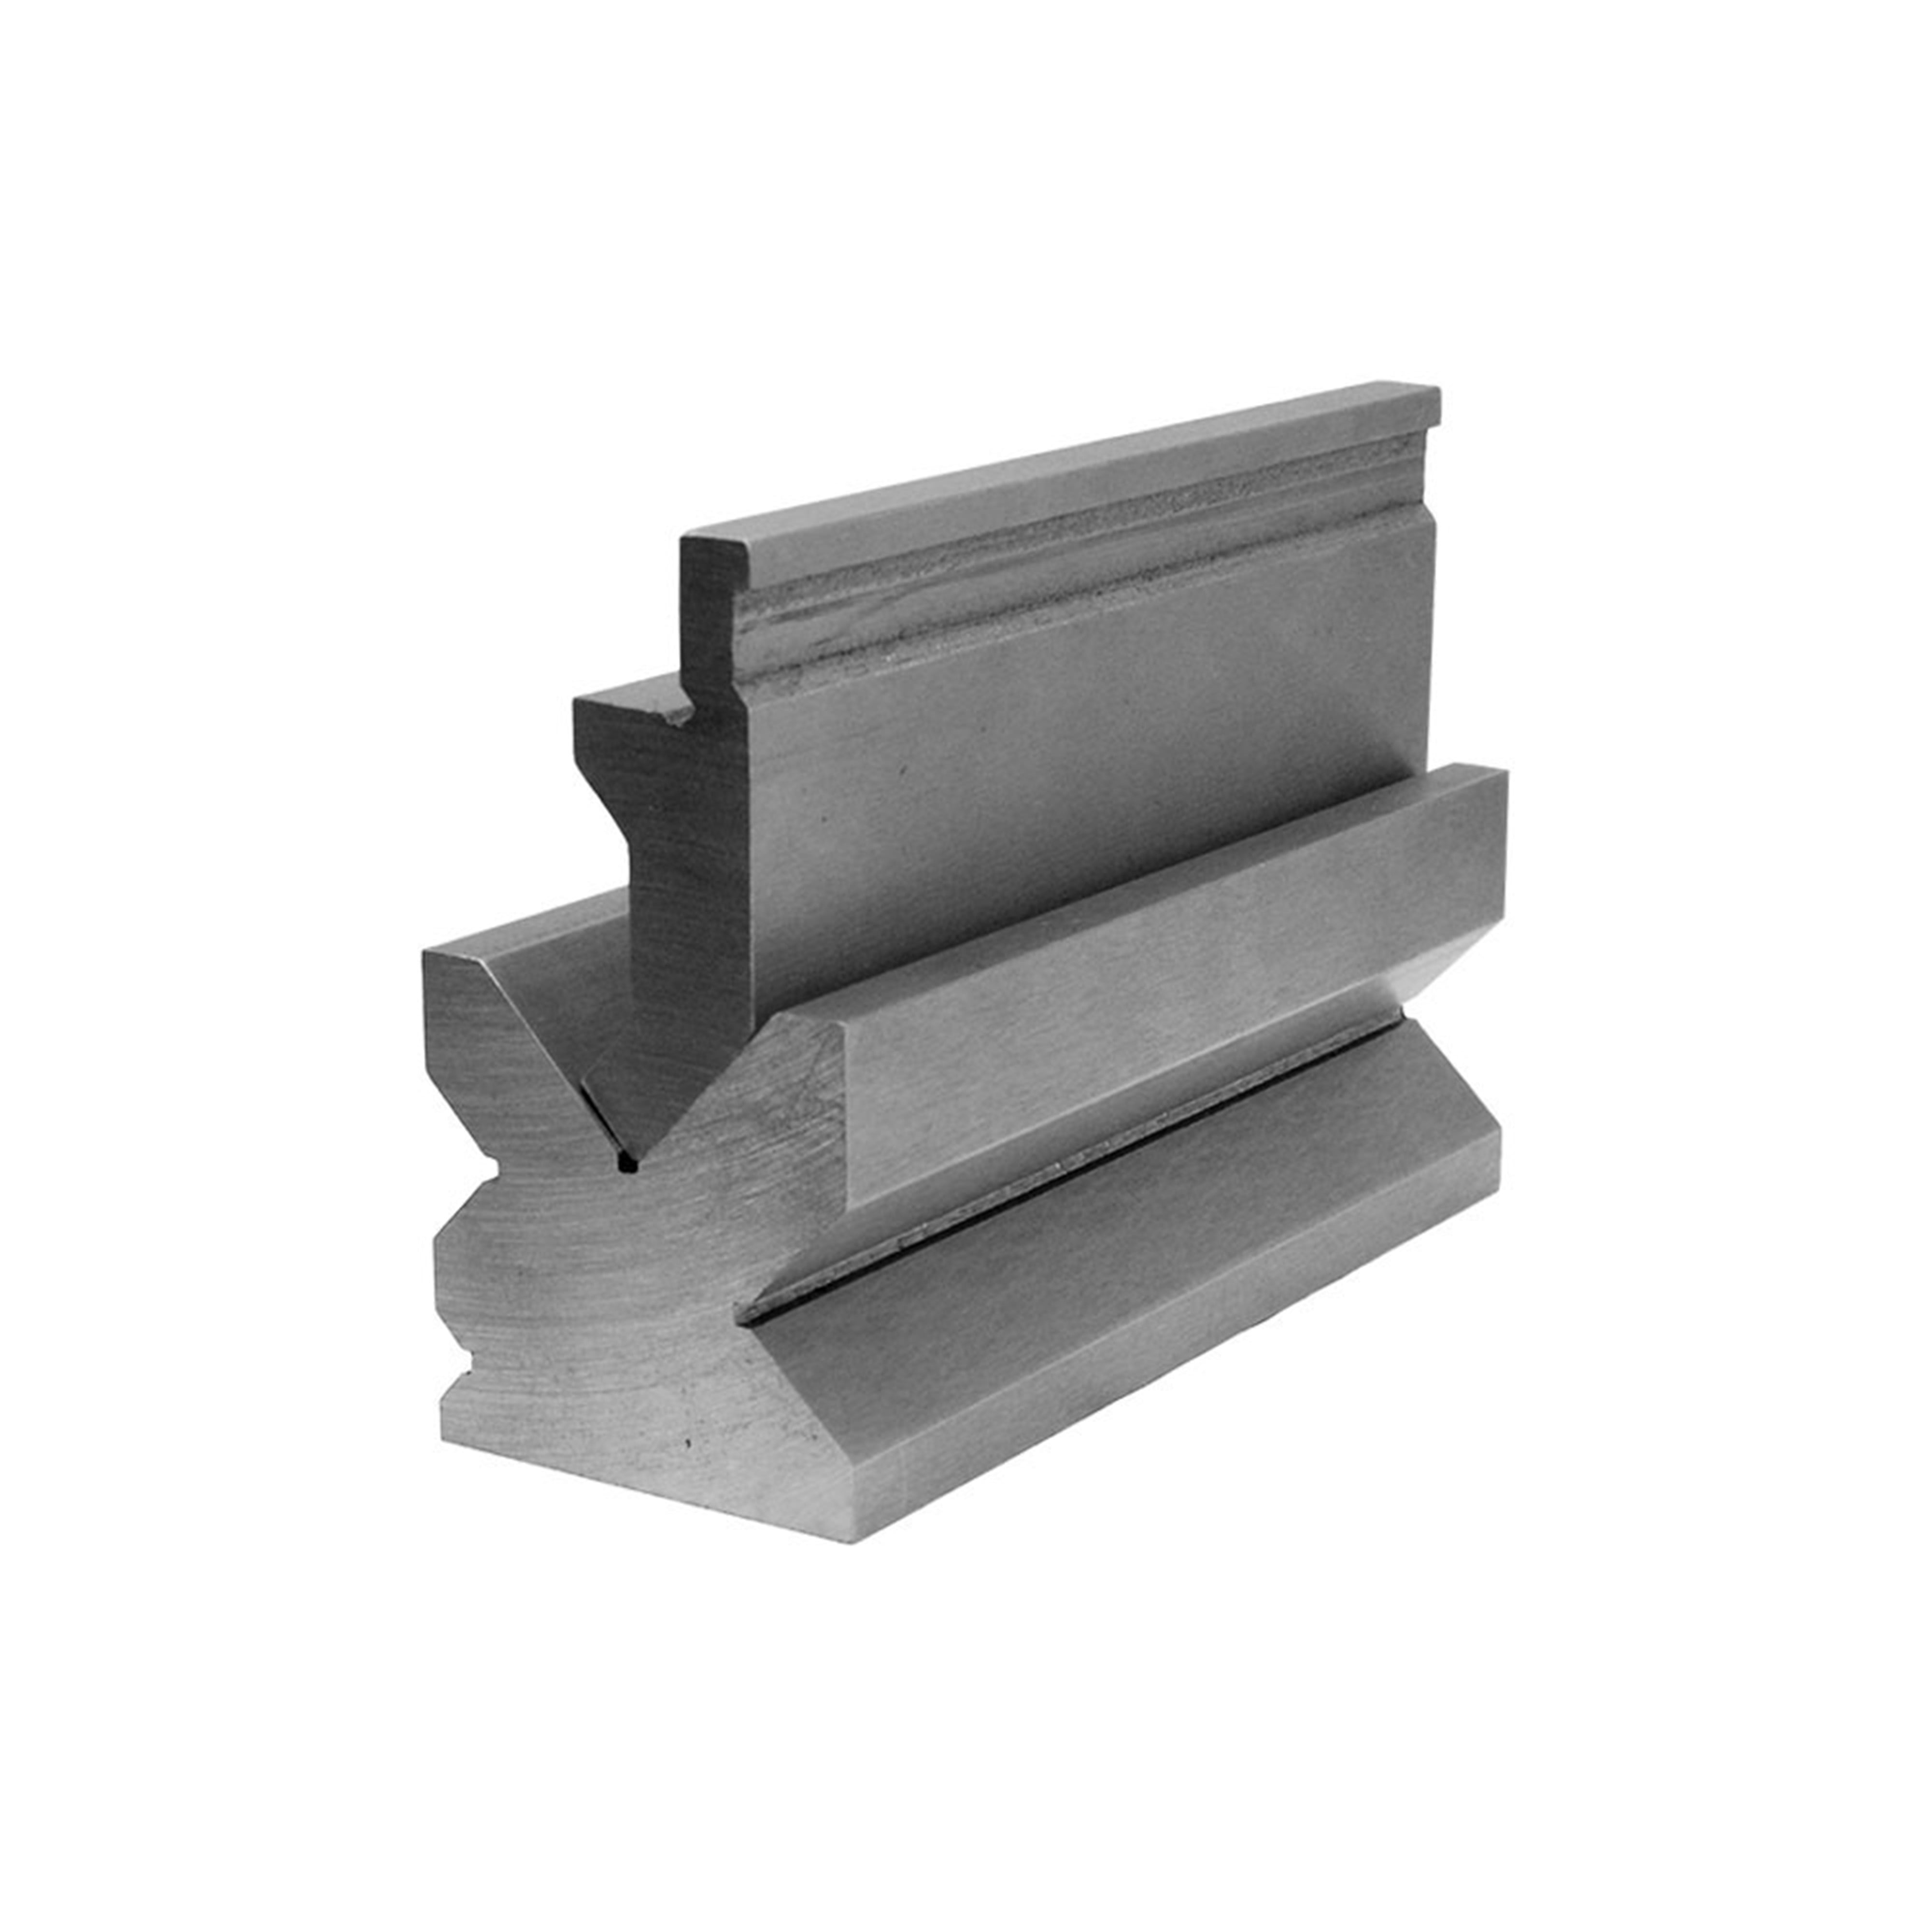 V-Die Block Press Brake Sold Steel 6 Inch 4-Way 2-3/8 Inch x 2-3/8 Inch 